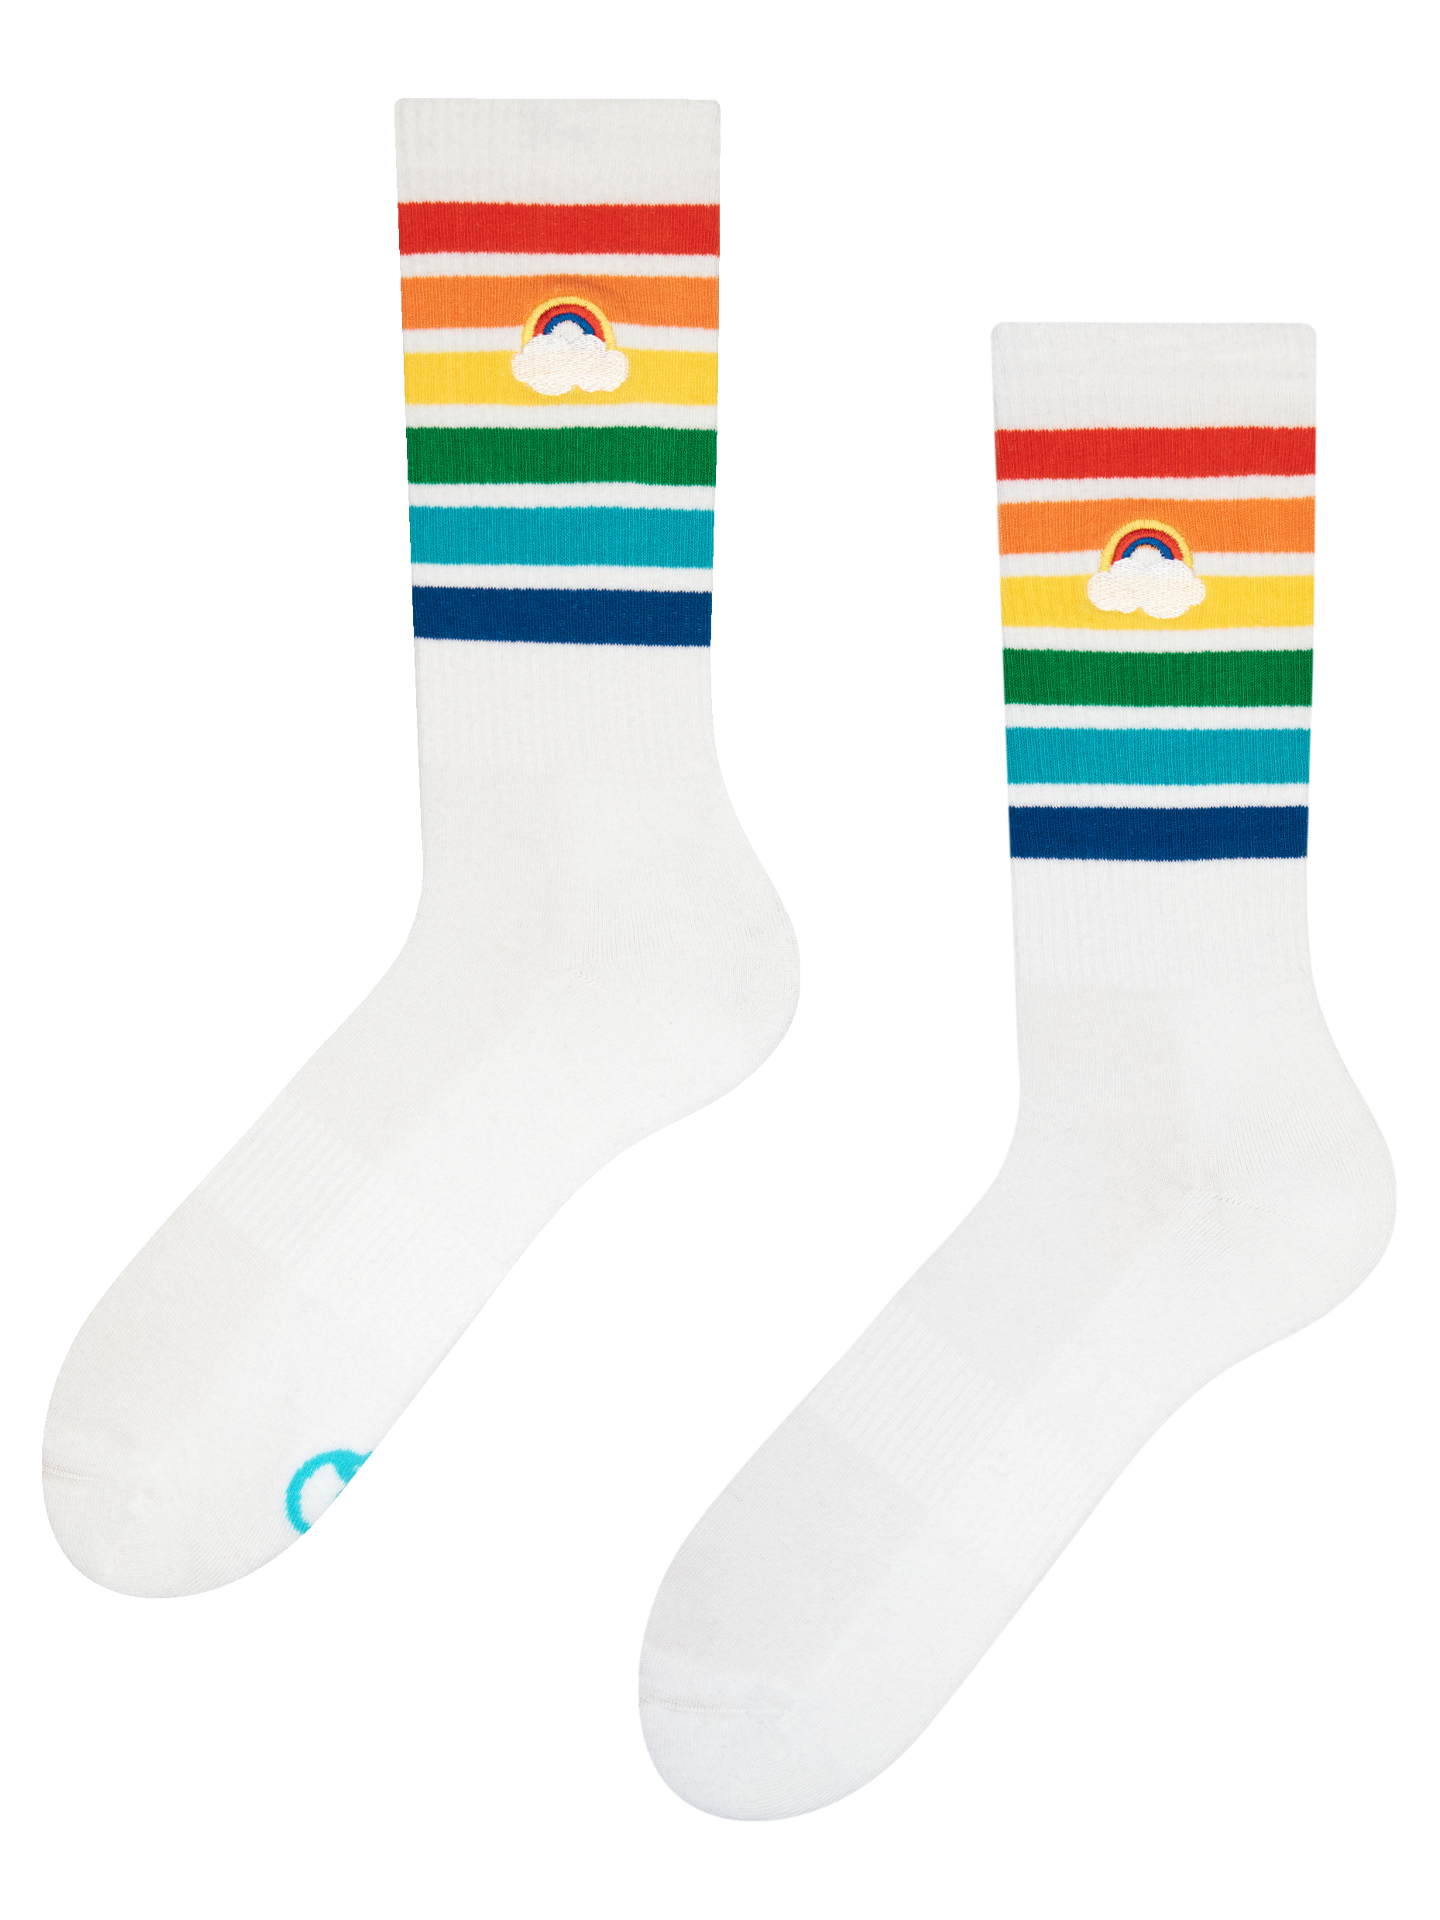 Sports Socks Rainbow & Cloud